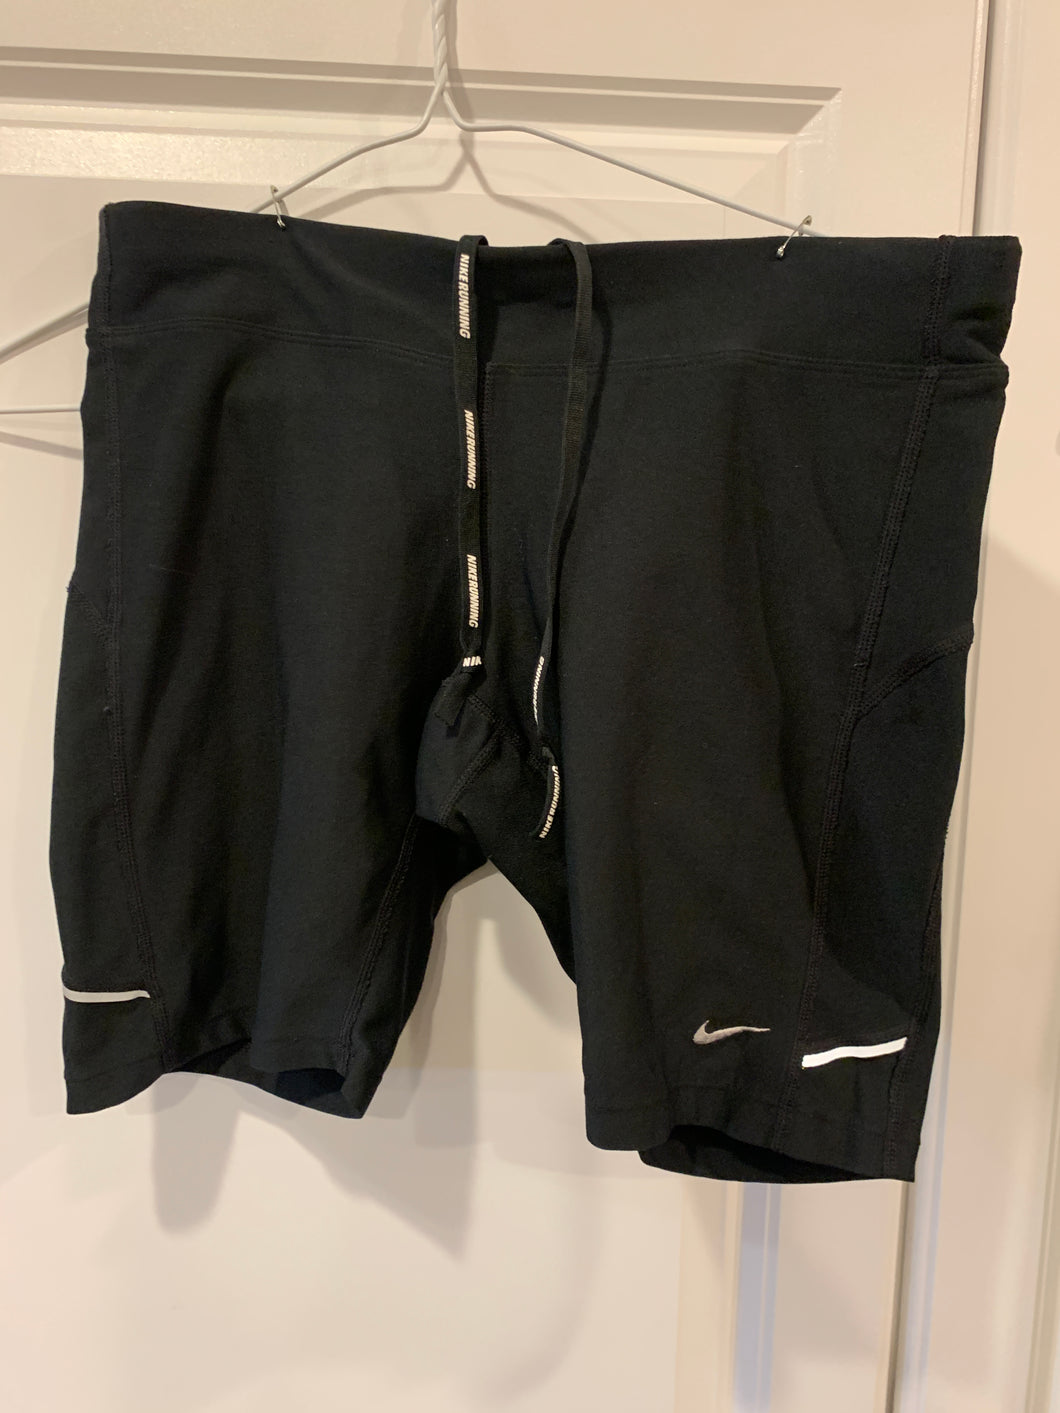 Nike Athletic Shorts Black Dry Fit Womens Medium Pair B Adult Medium